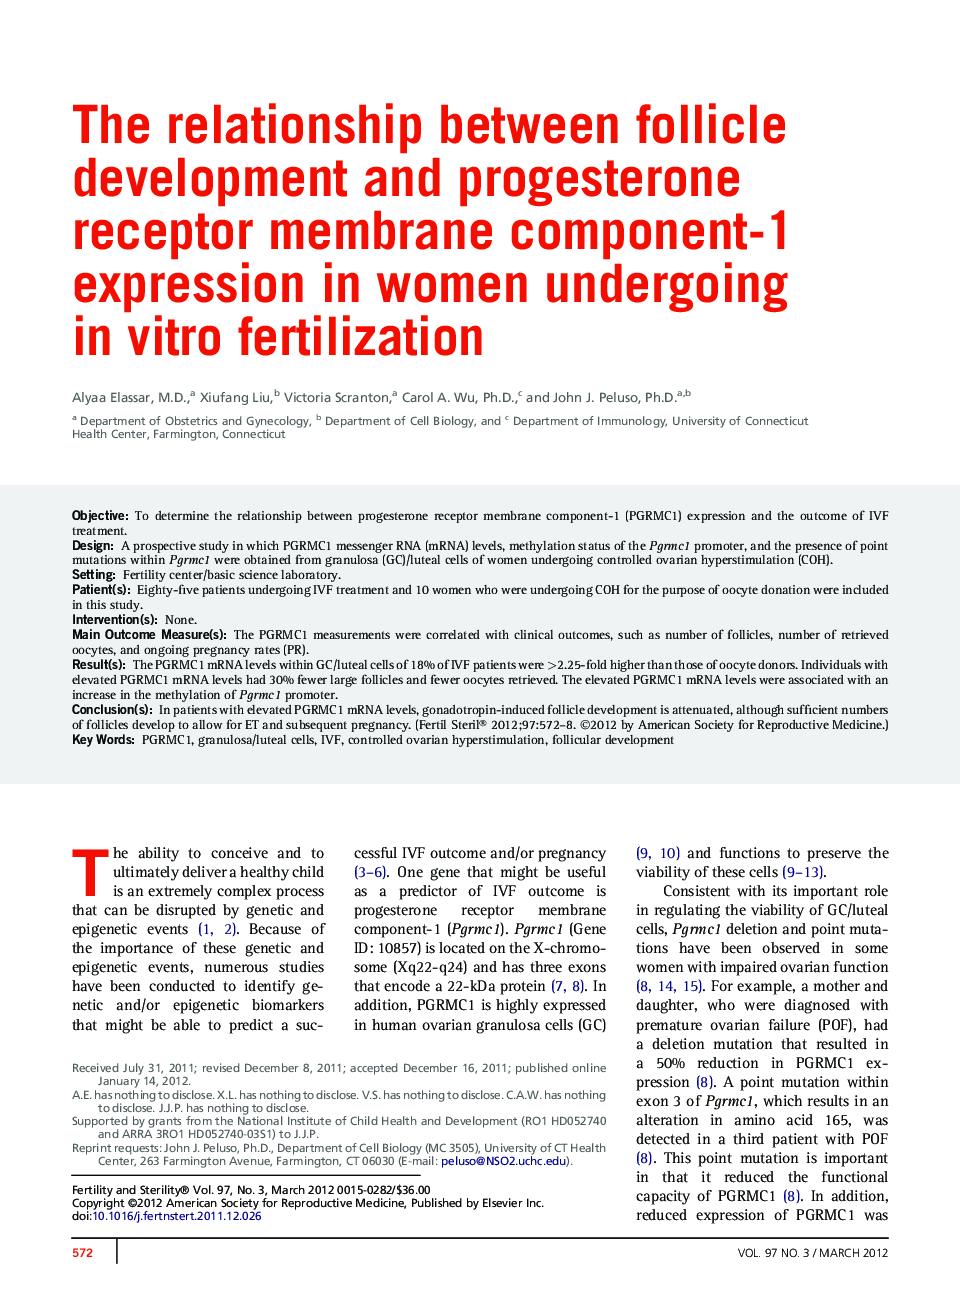 The relationship between follicle development and progesterone receptor membrane component-1 expression in women undergoing inÂ vitro fertilization